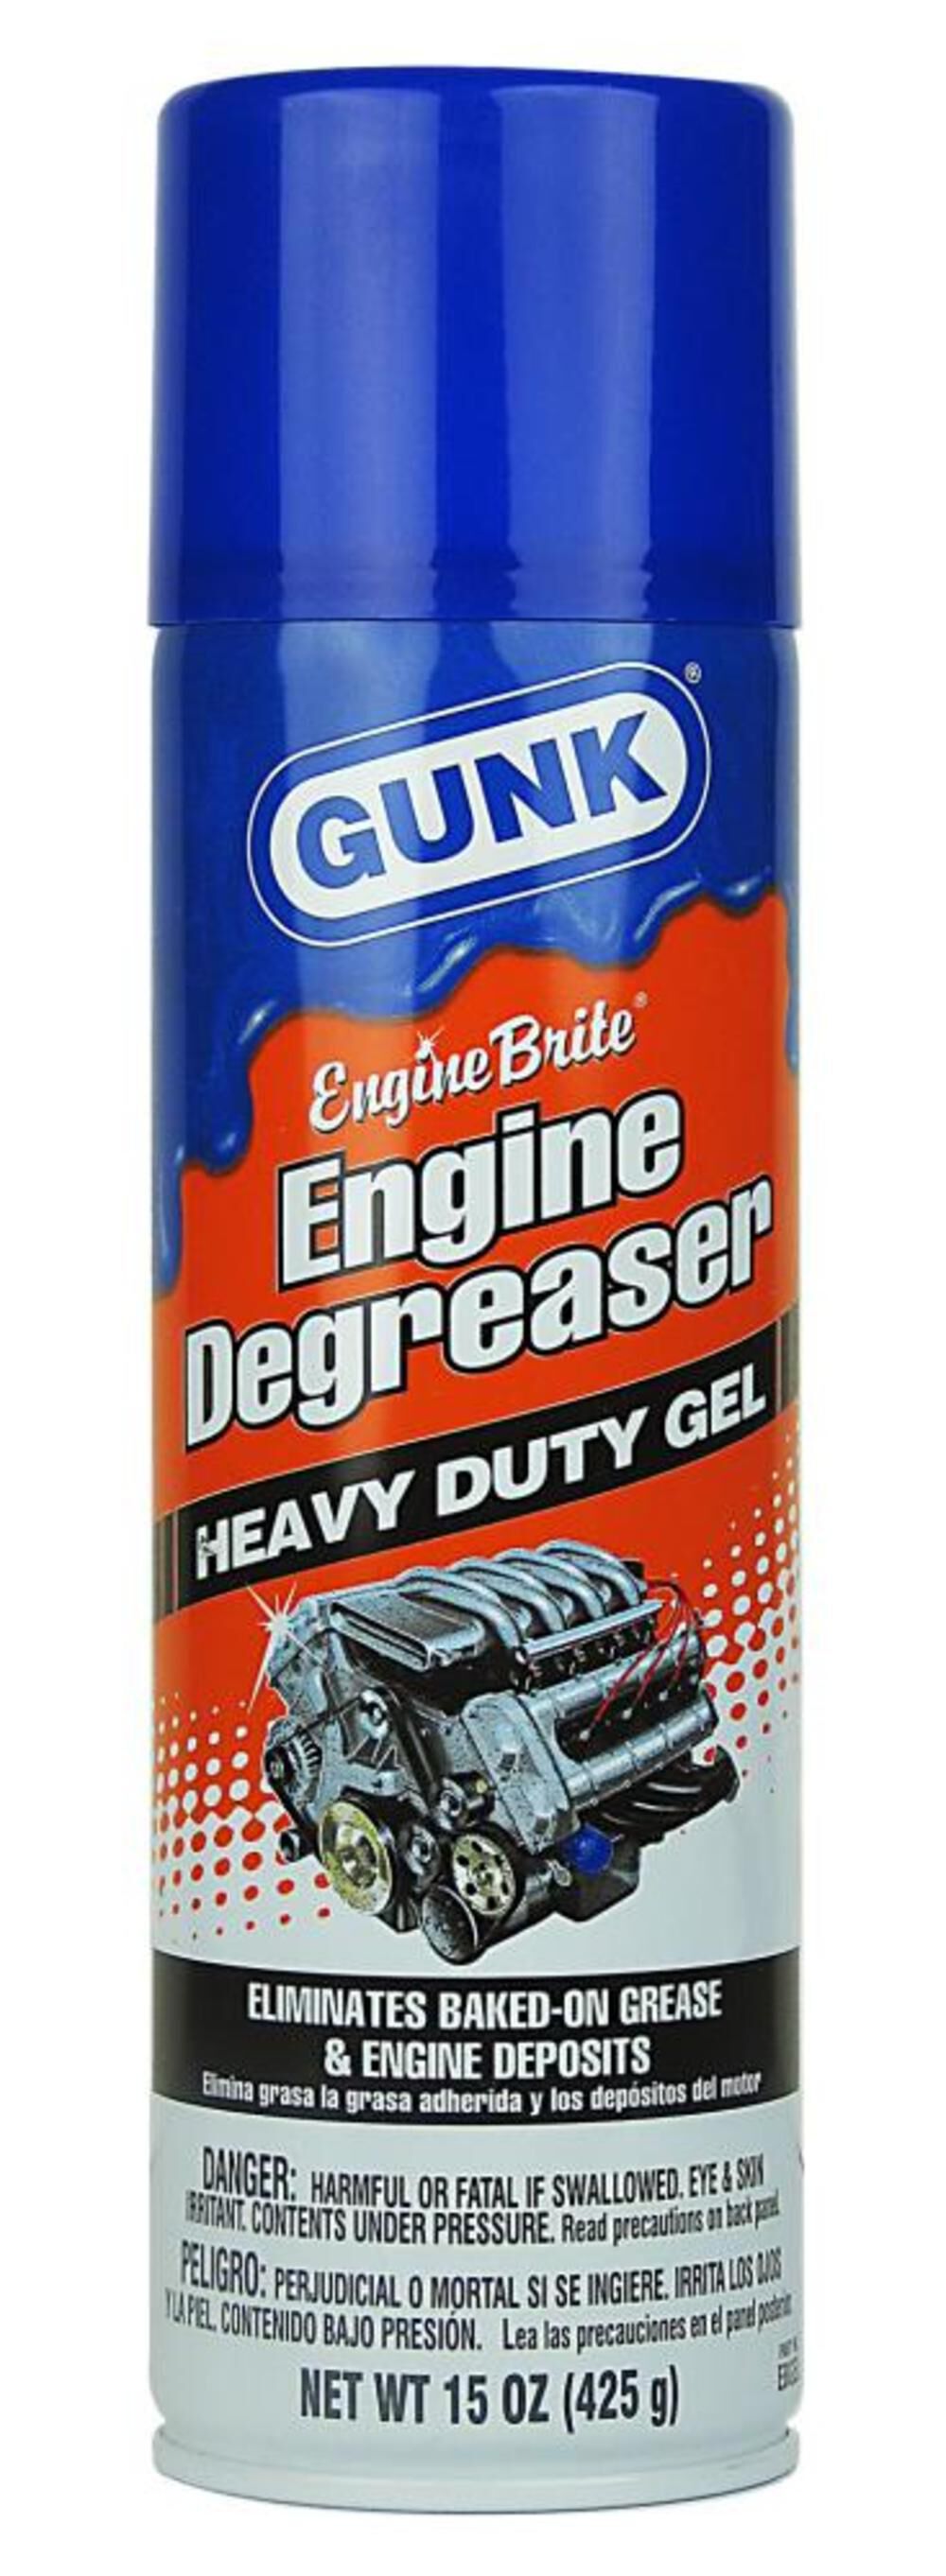 Gunk Engine Degreaser Heavy Duty Gel EBGEL from Gunk - Acme Tools